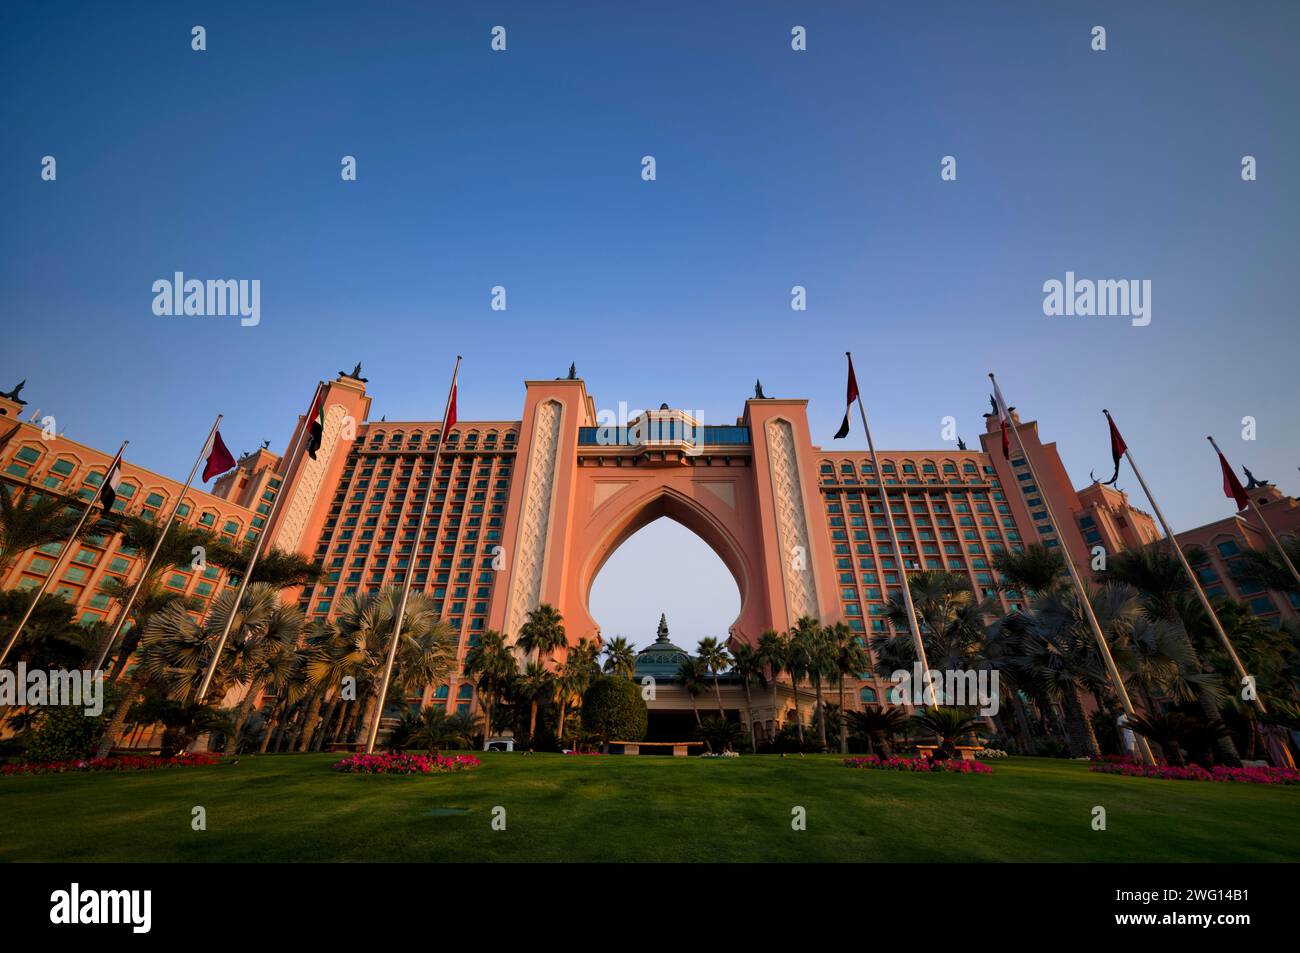 Hotel Atlantis, The Palm Jumeirah, Dubai, United Arab Emirates, VAR Stock Photo